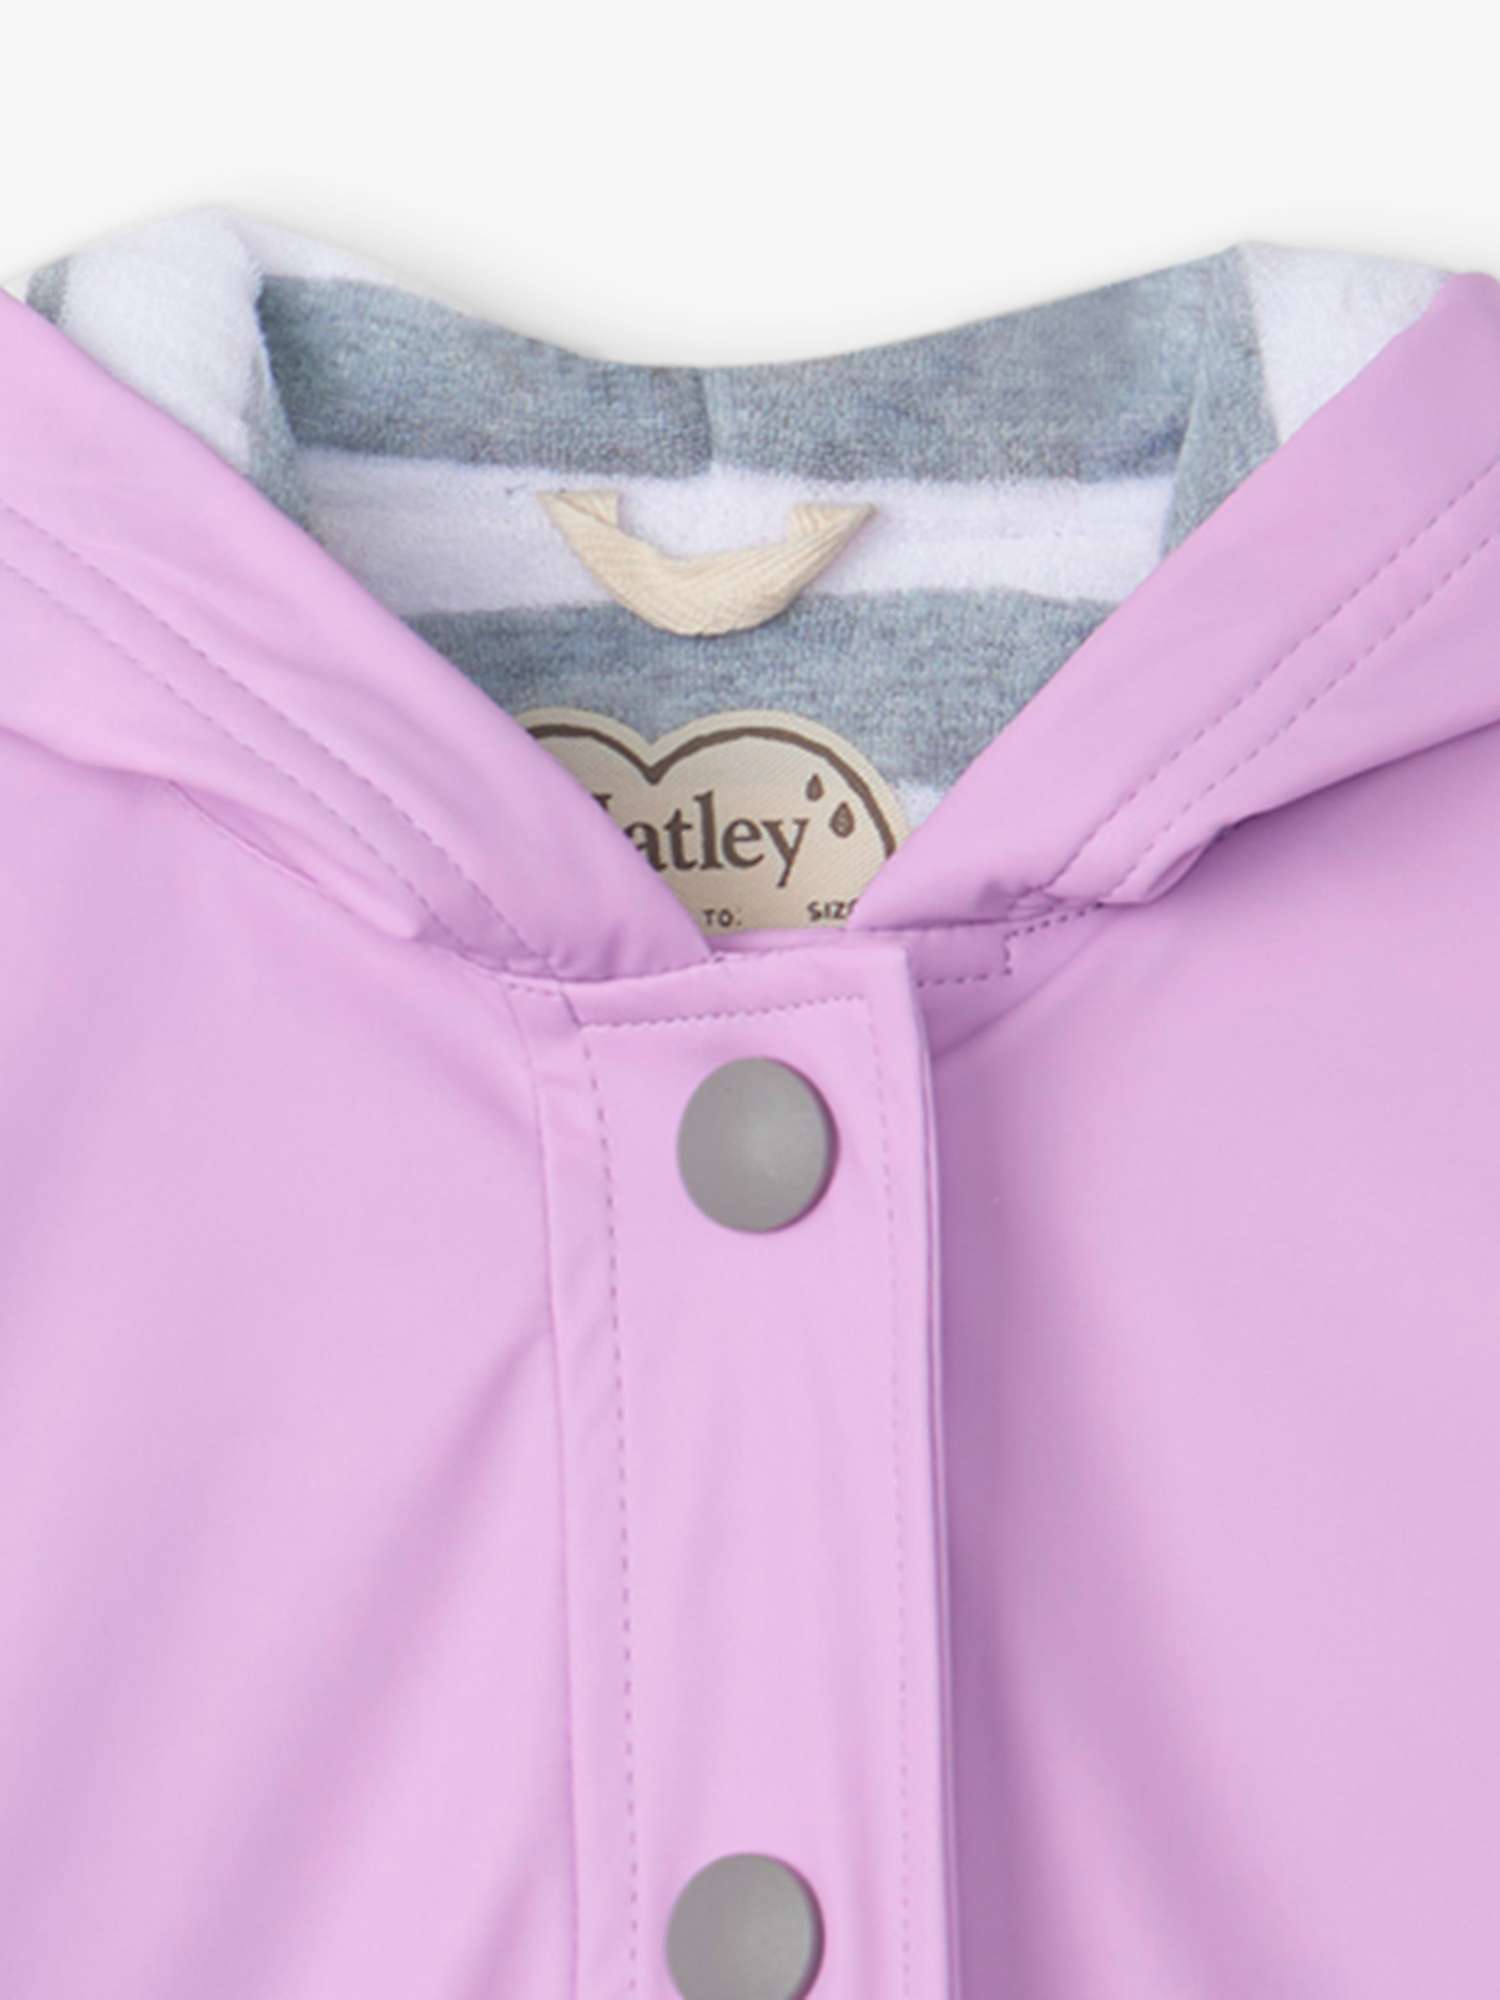 Buy Hatley Kids' Splash Hooded Jacket, Sheer Lilac Online at johnlewis.com